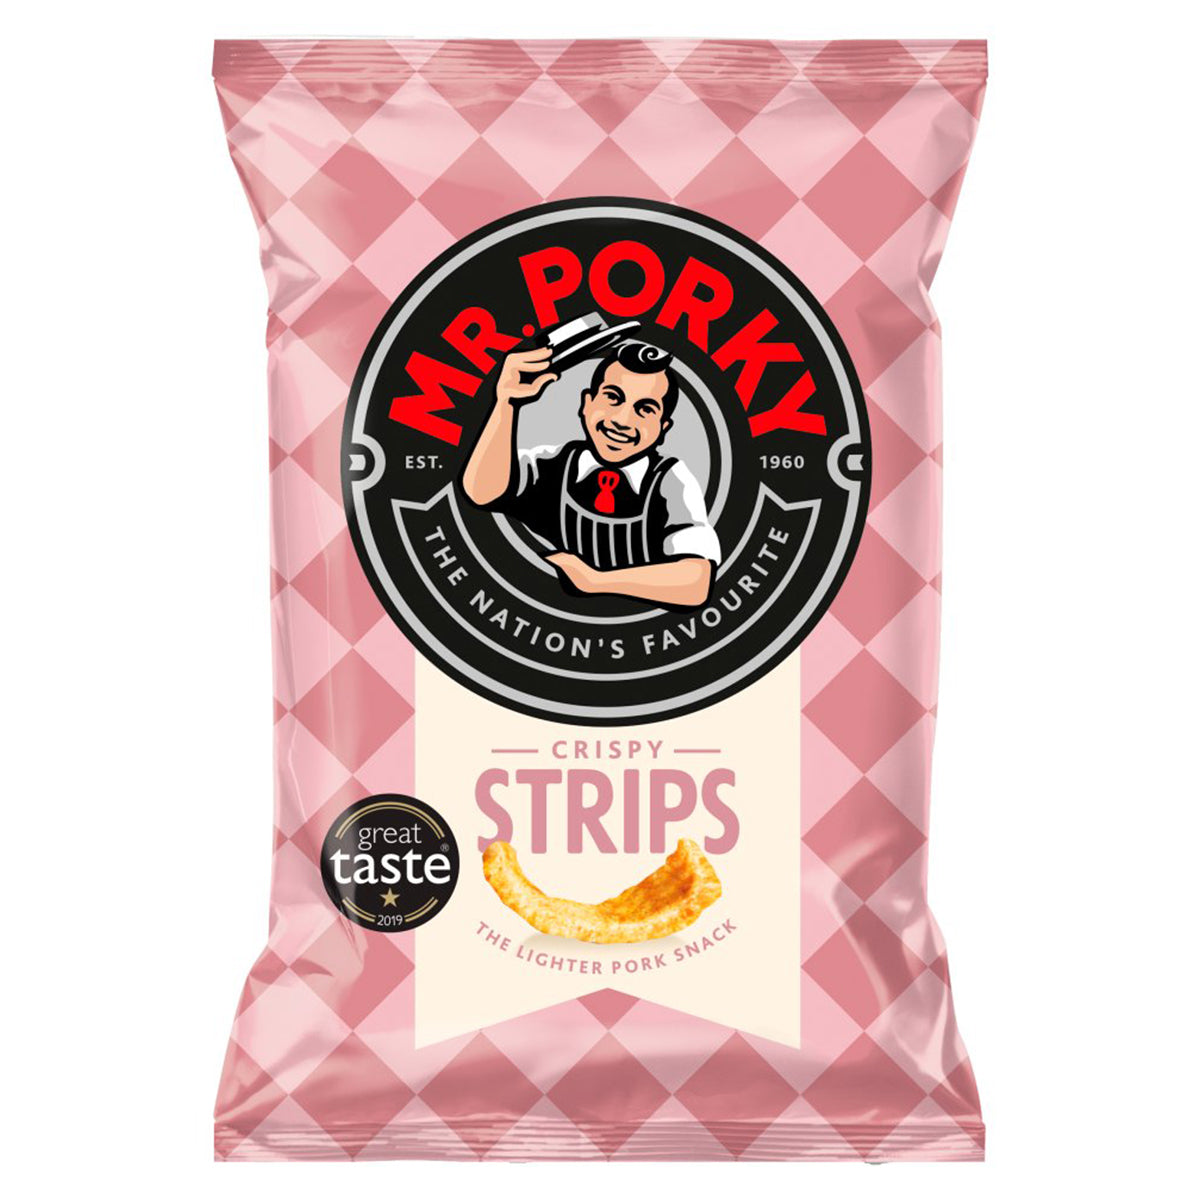 Mr. Porky - Crispy Strips - 35g - Continental Food Store